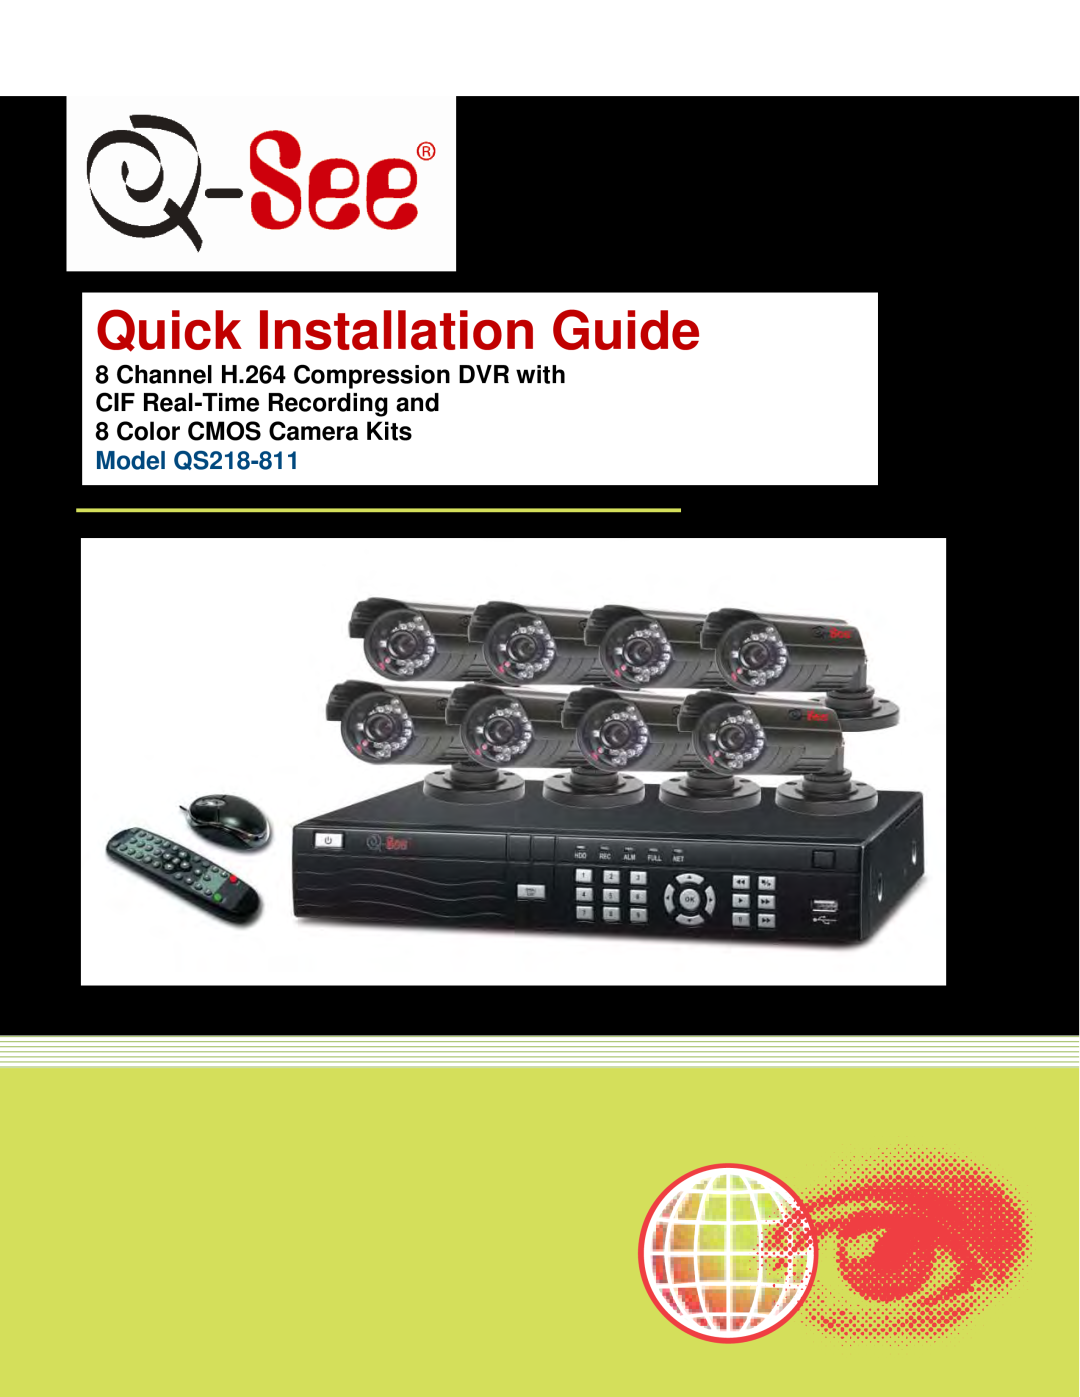 Q-See manual Quick Installation Guide, Color CMOS Camera Kits Model QS218-811 